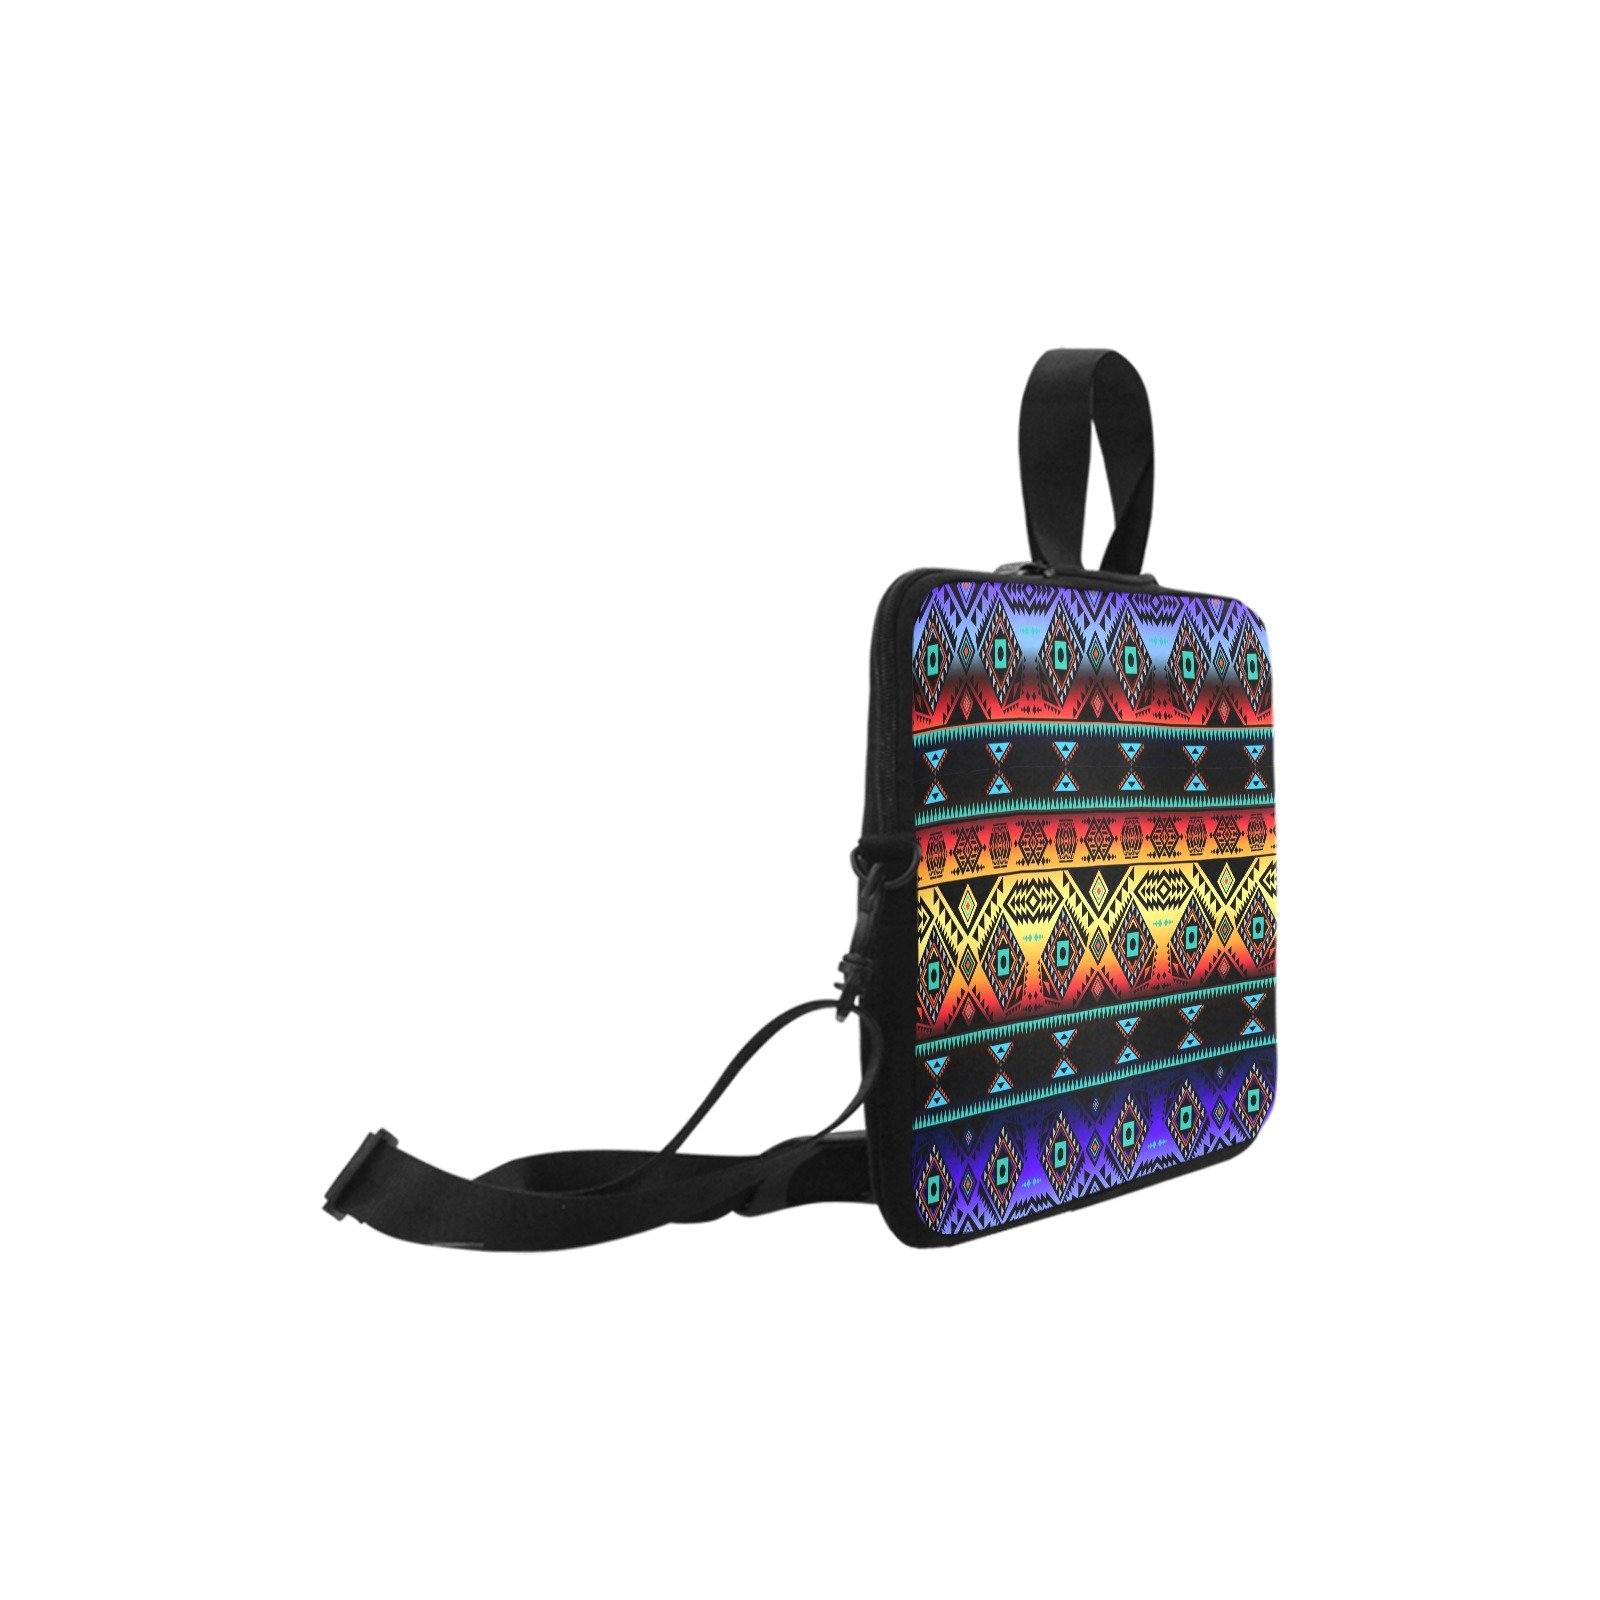 California Coast Sunset Laptop Handbags 17" bag e-joyer 